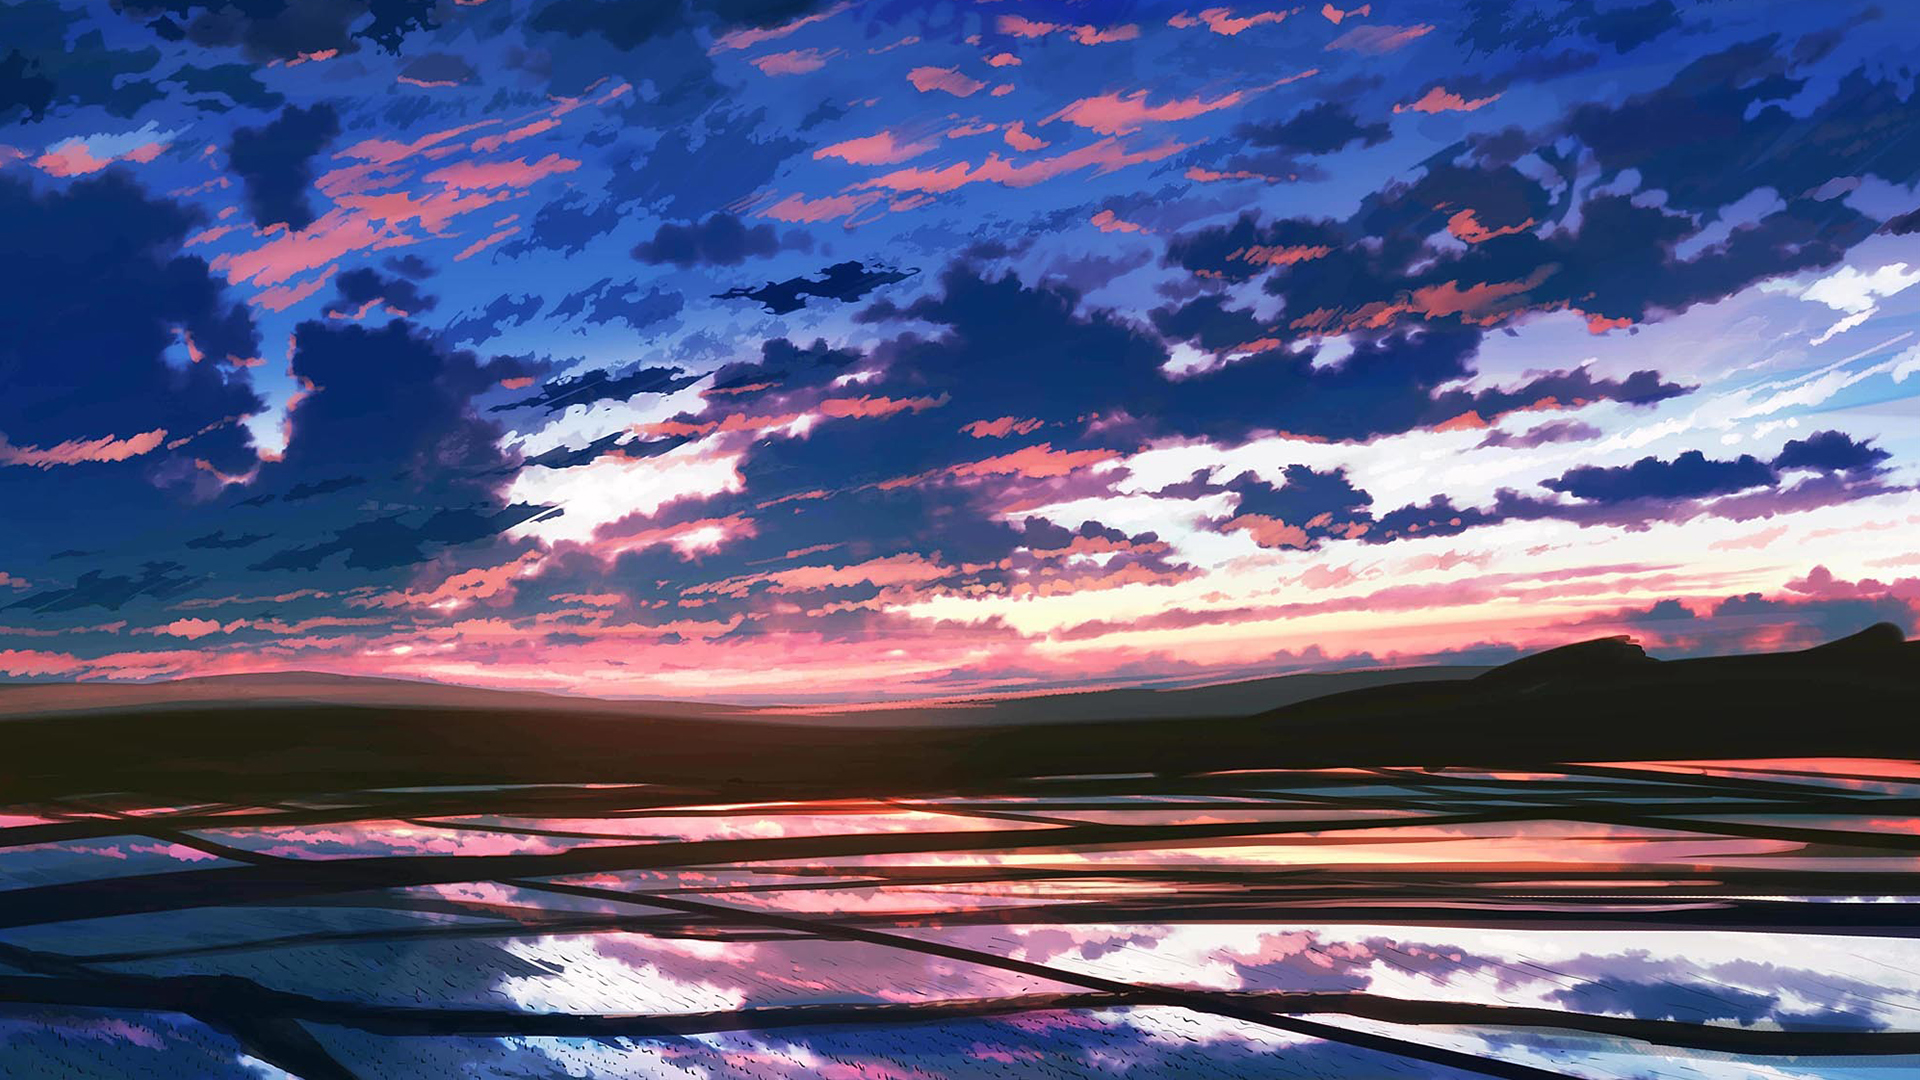 Colorful Digital Art Drawing Landscape Sunset 1920x1080